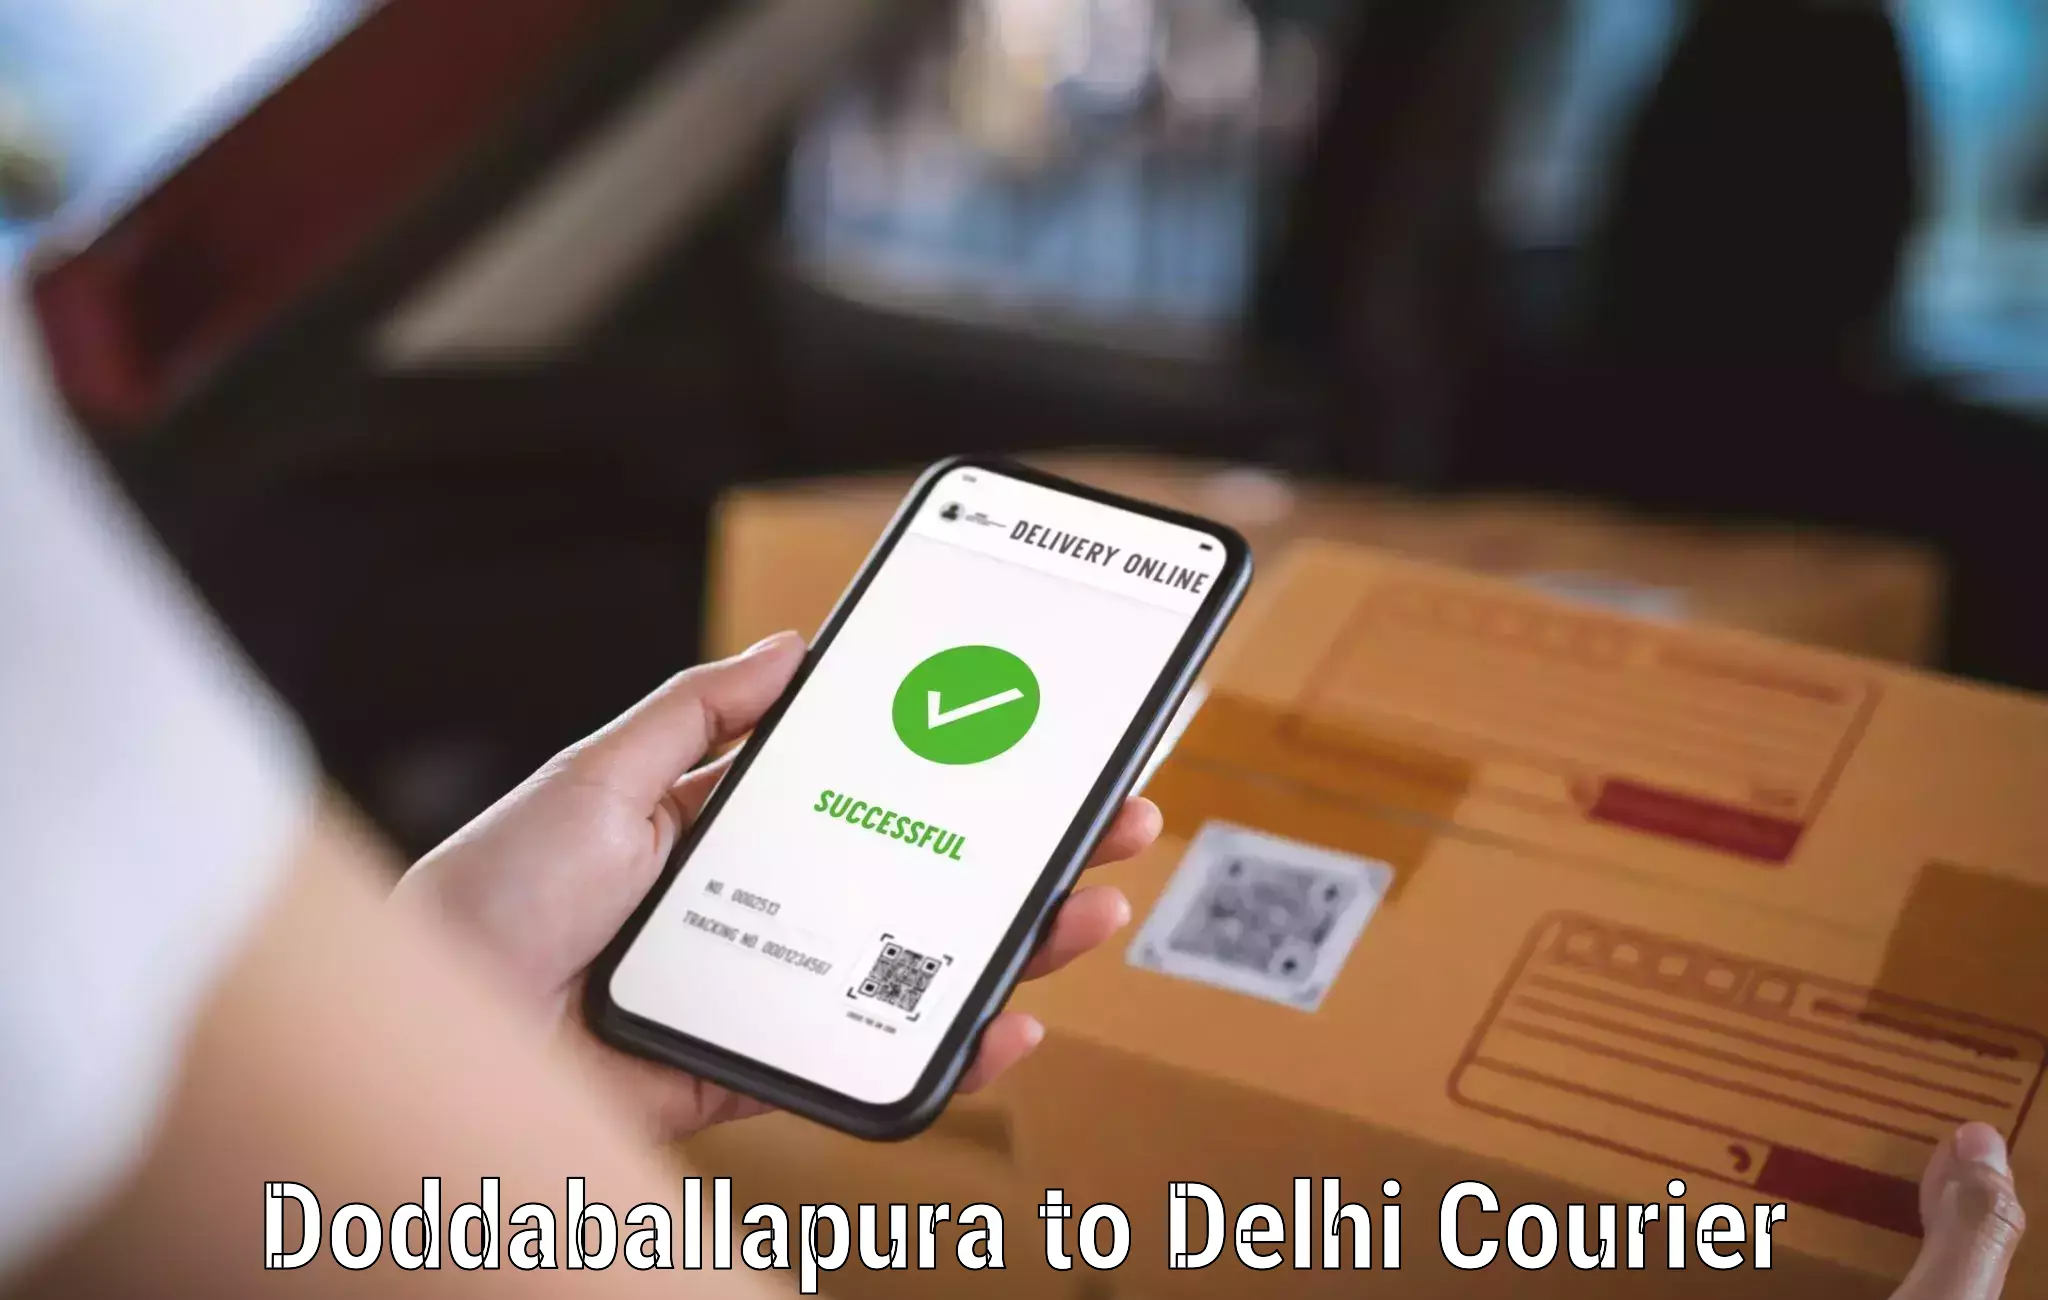 On-demand delivery Doddaballapura to Delhi Technological University DTU